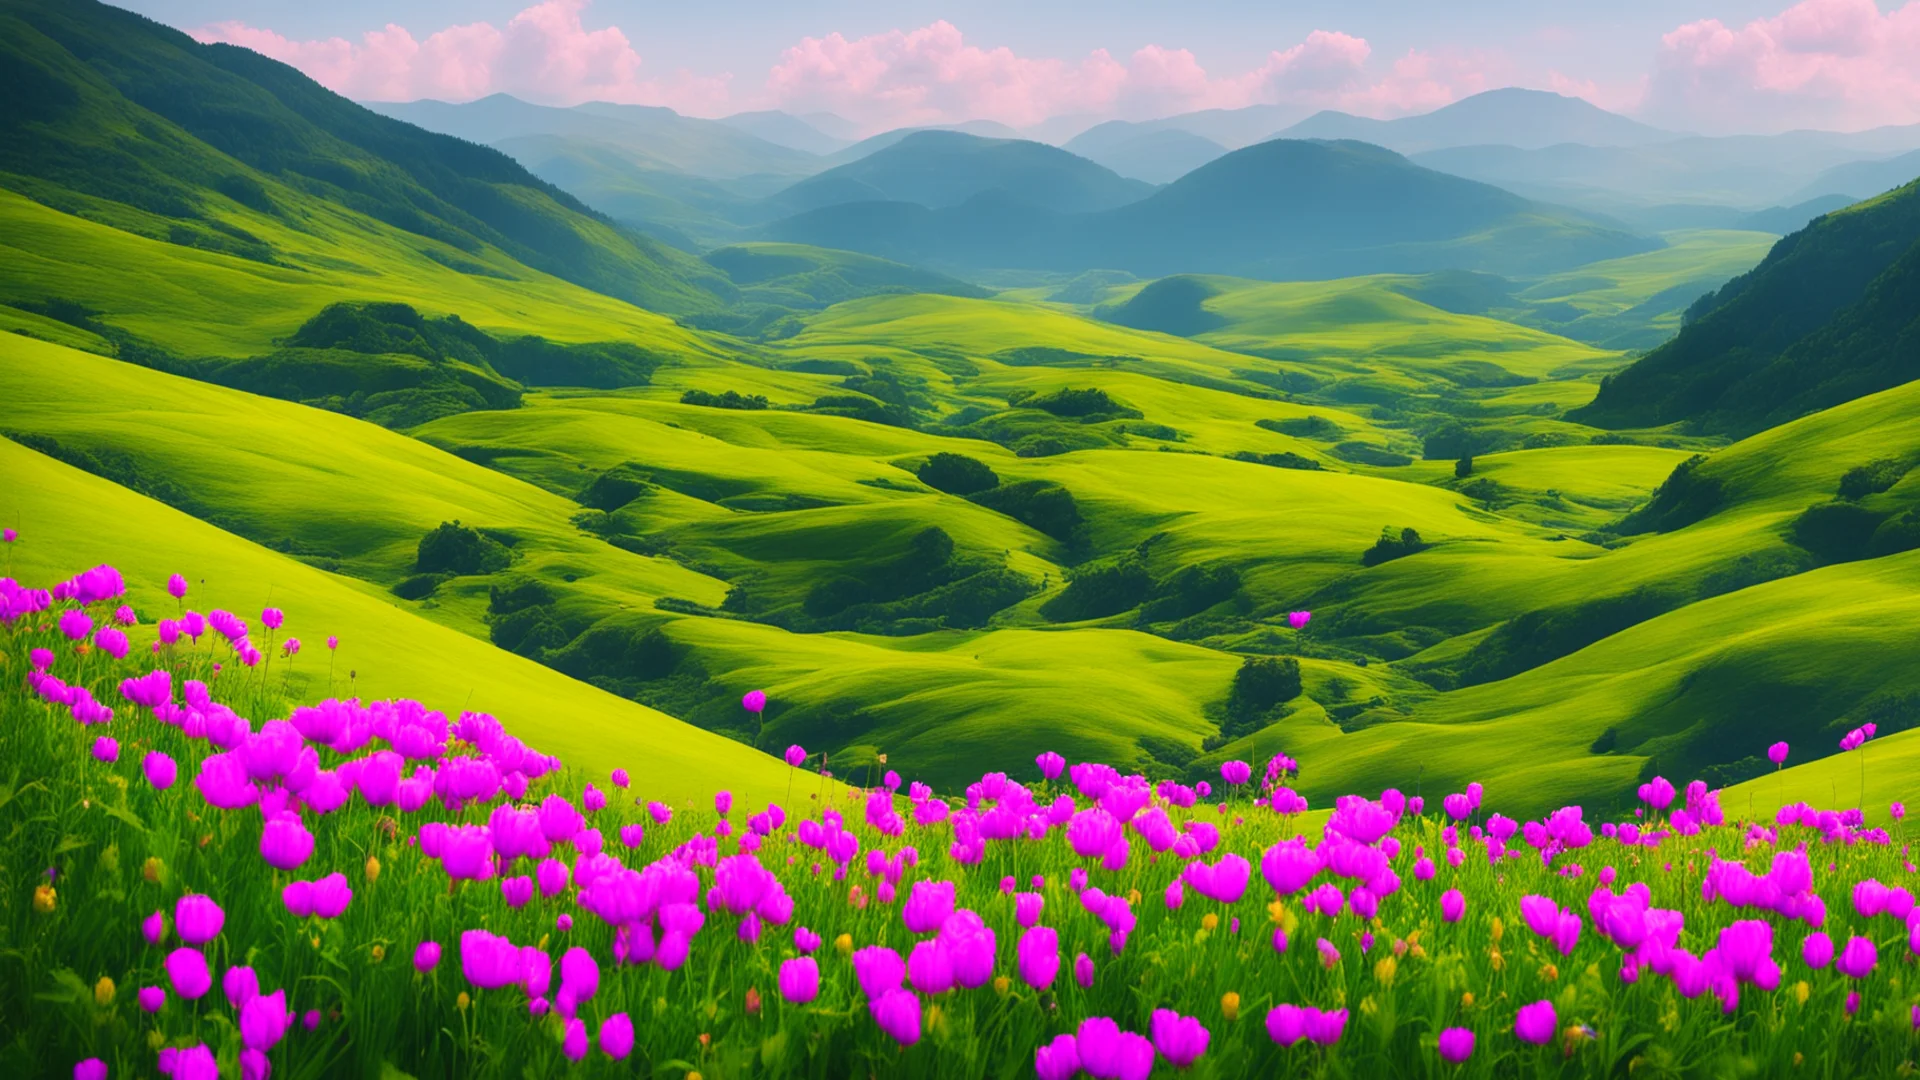 beautiful scenery amazing land peaceful lowfi flowers hills confident engaging wow artstation art 3 wide